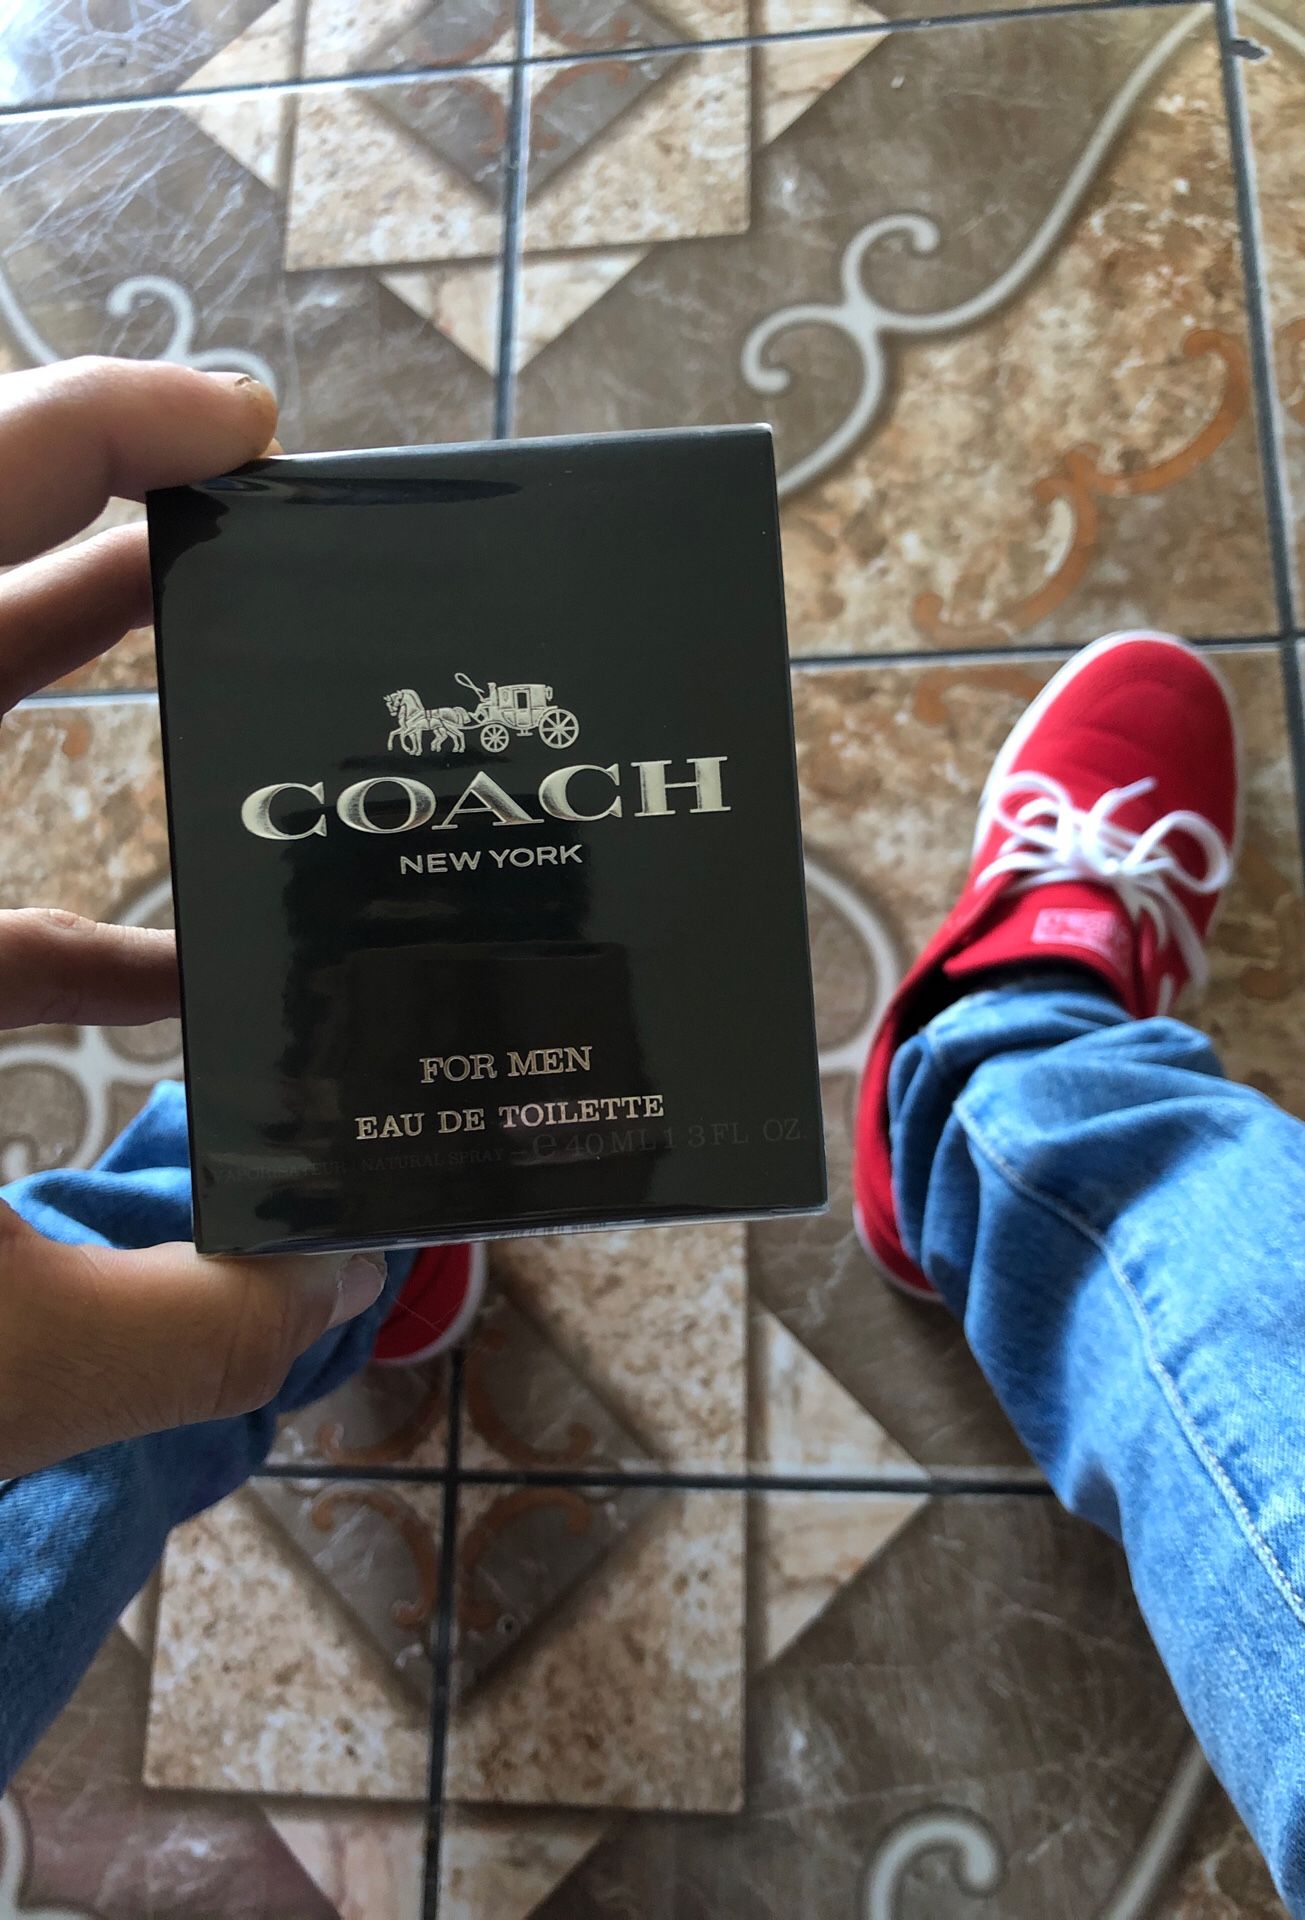 Coach perfume for Men